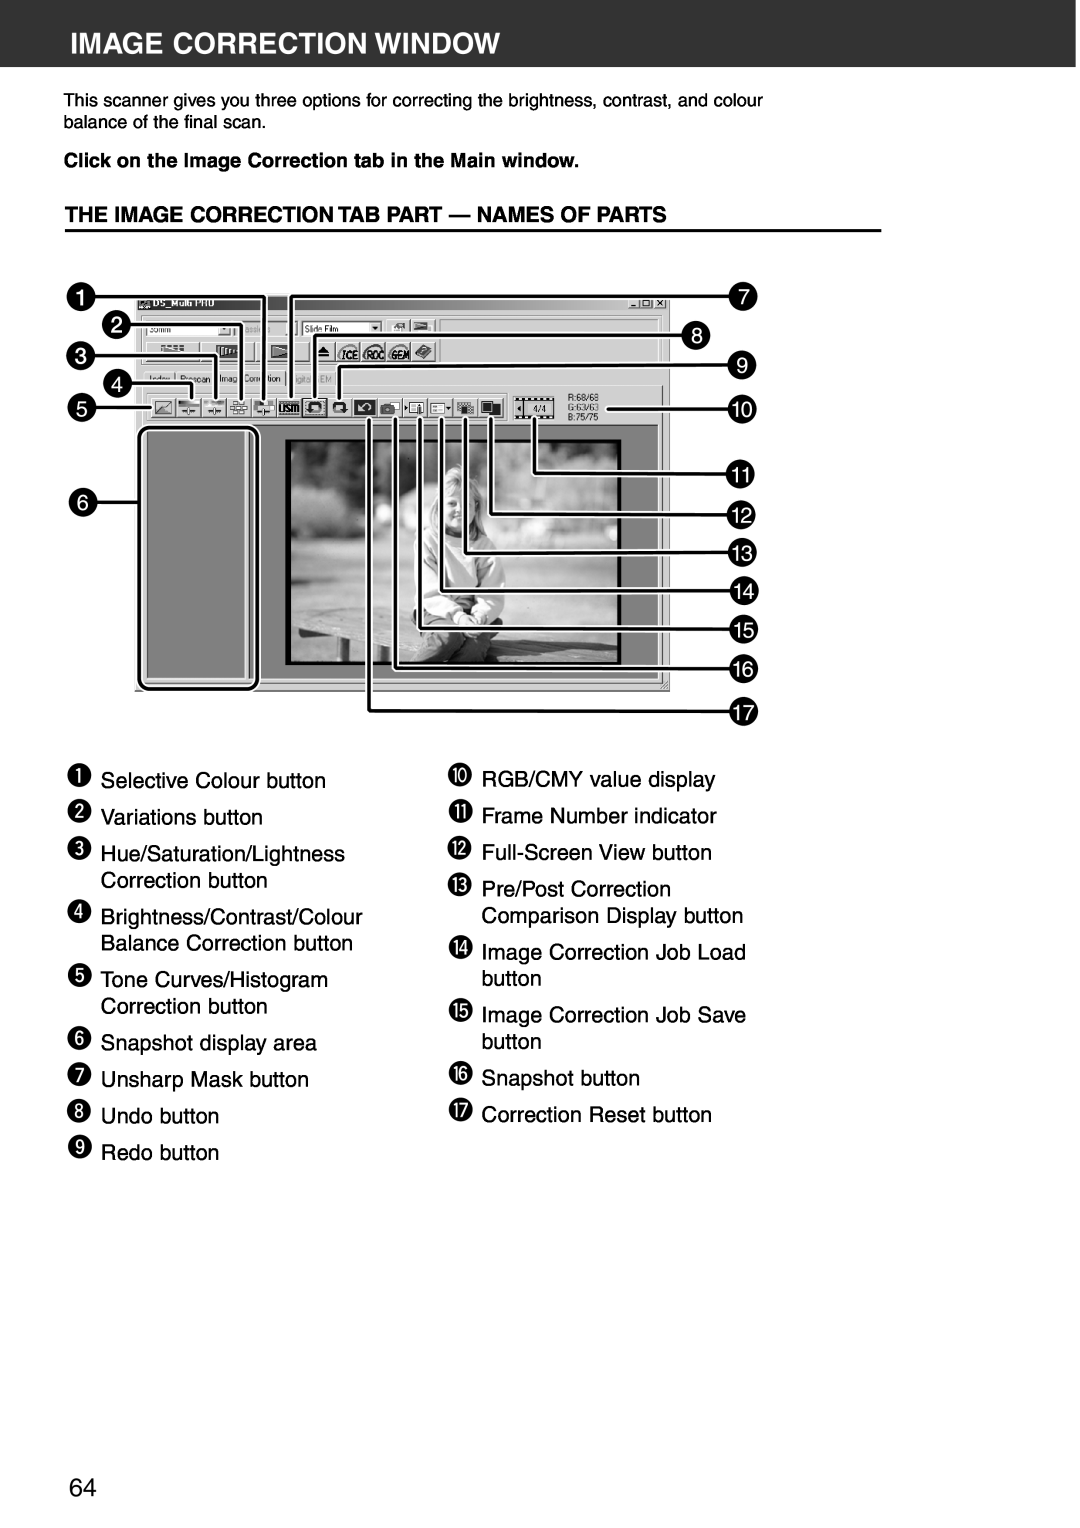 Konica Minolta Scan Multi PRO instruction manual Image Correction Window, The Image Correction Tab Part - Names Of Parts 